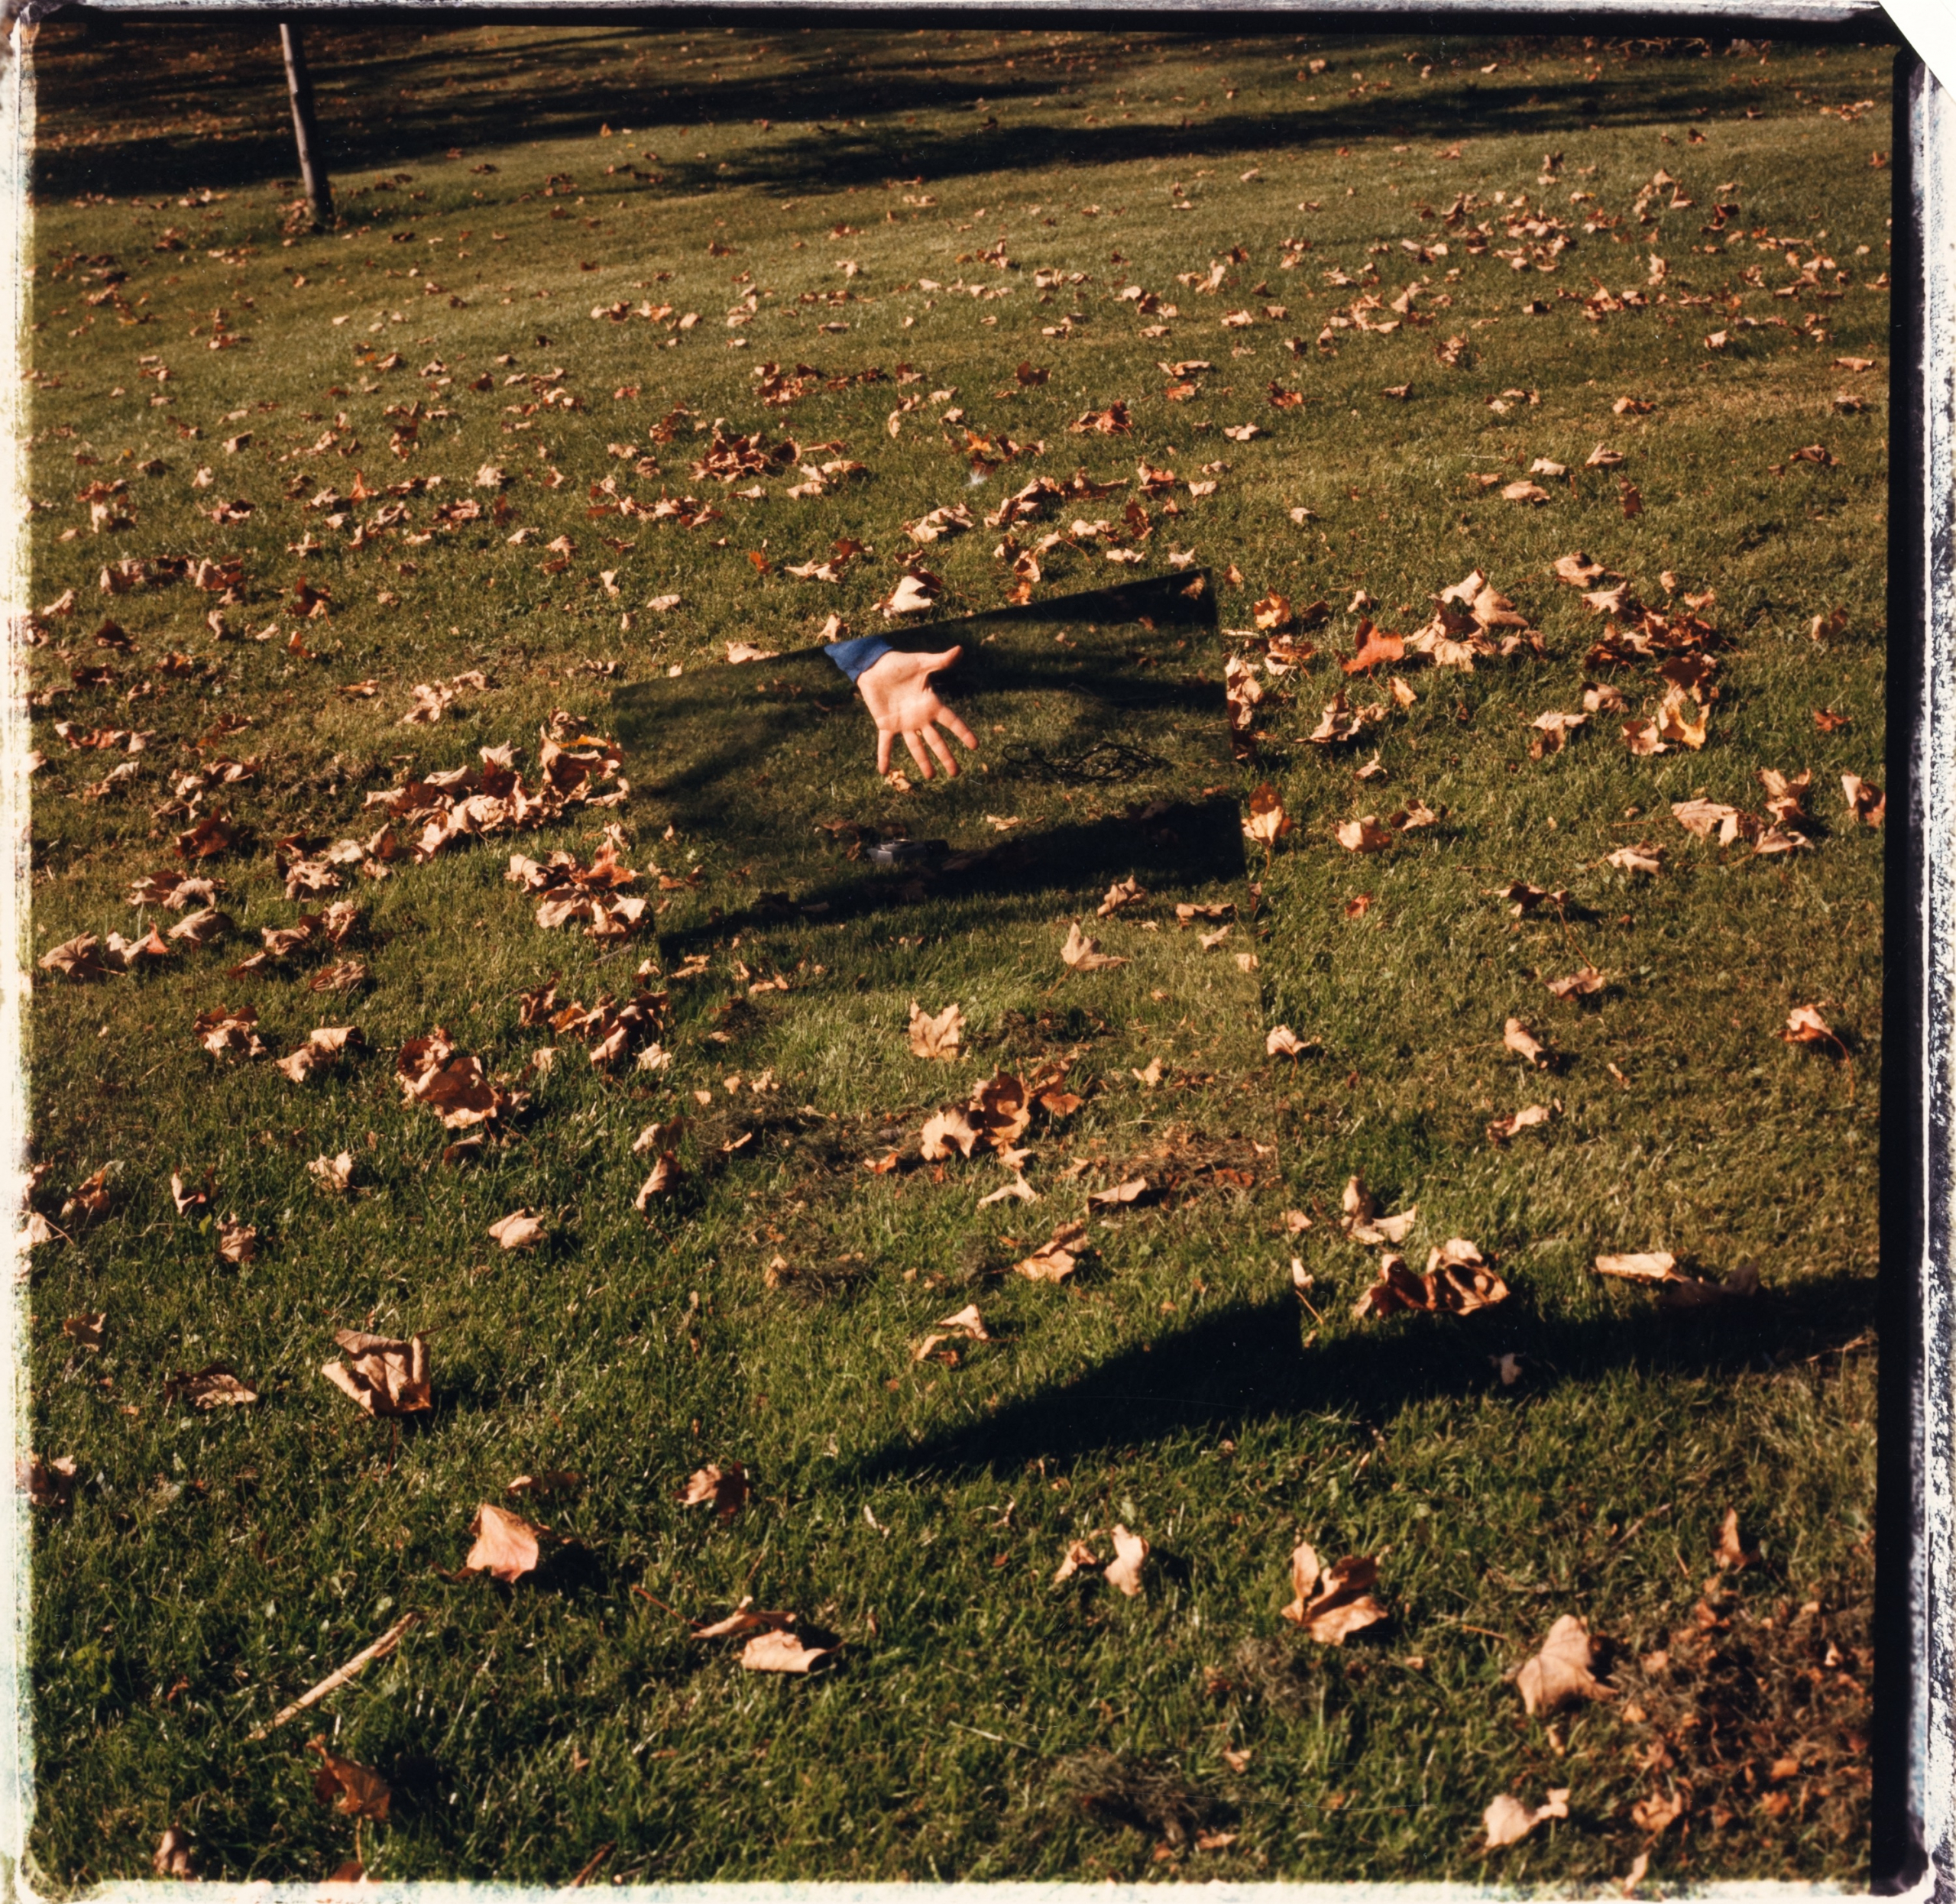 Rita Hammond, Grass, Mirror, Hand, circa 1989